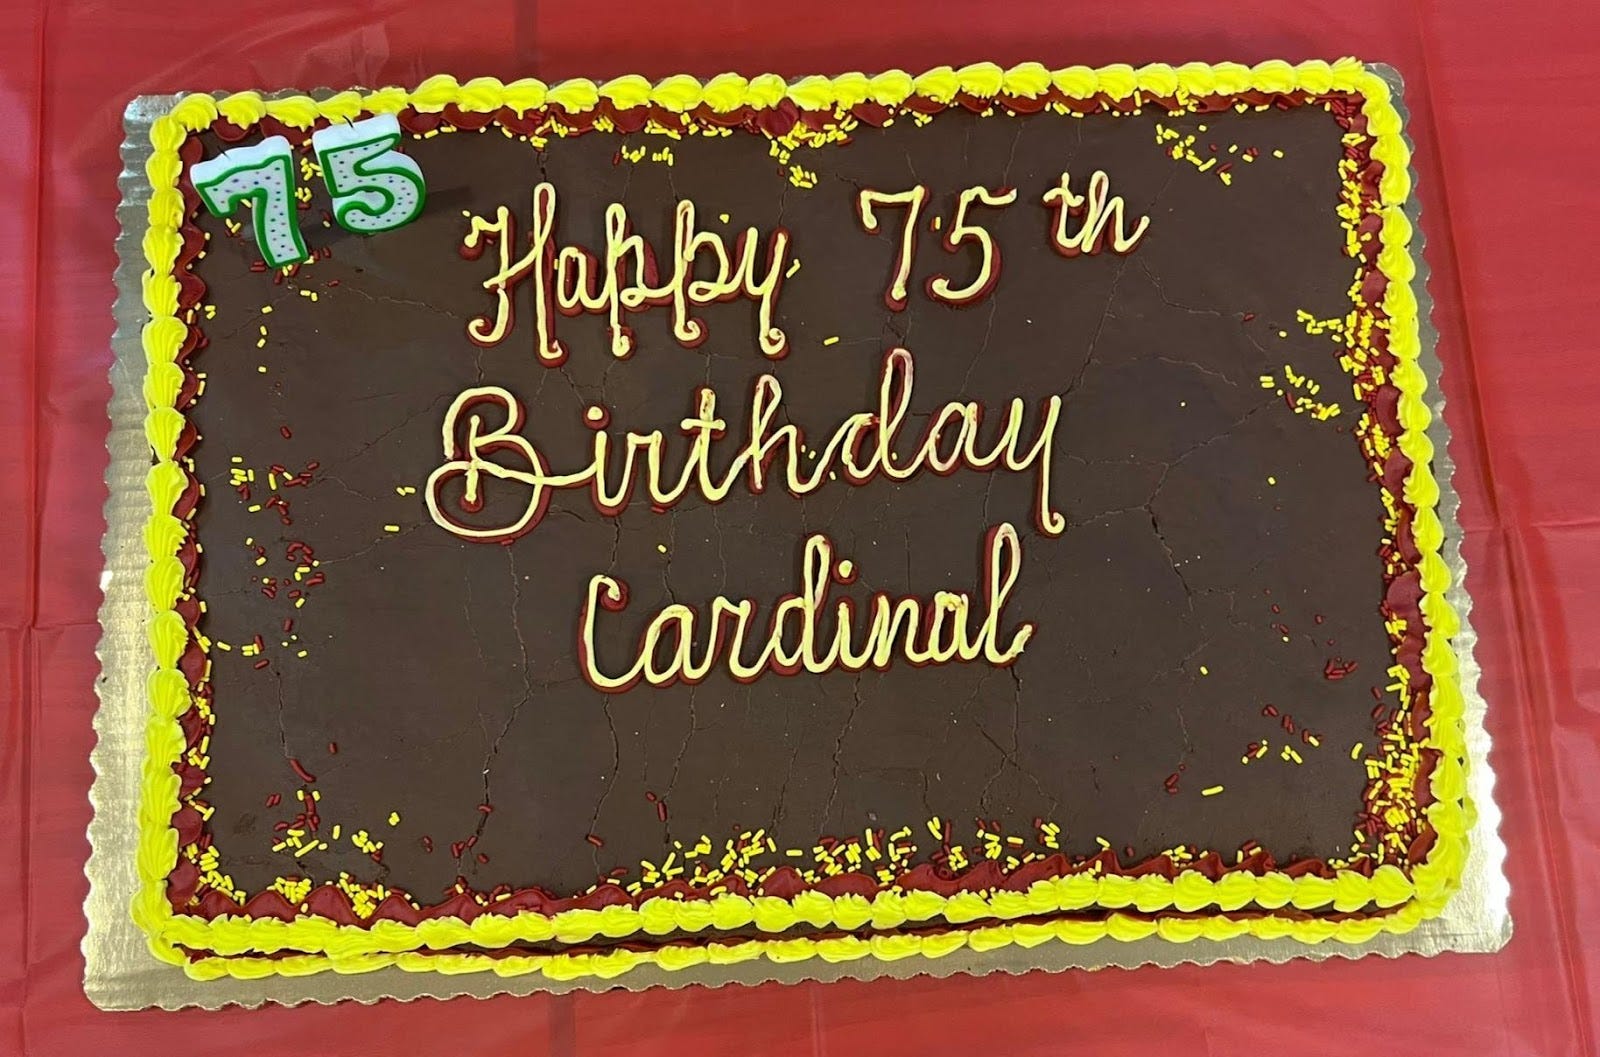 Cardinal Cake Design Images (Cardinal Birthday Cake Ideas) | Buttercream  cake decorating, Christmas bundt cake, Halloween cake decorating